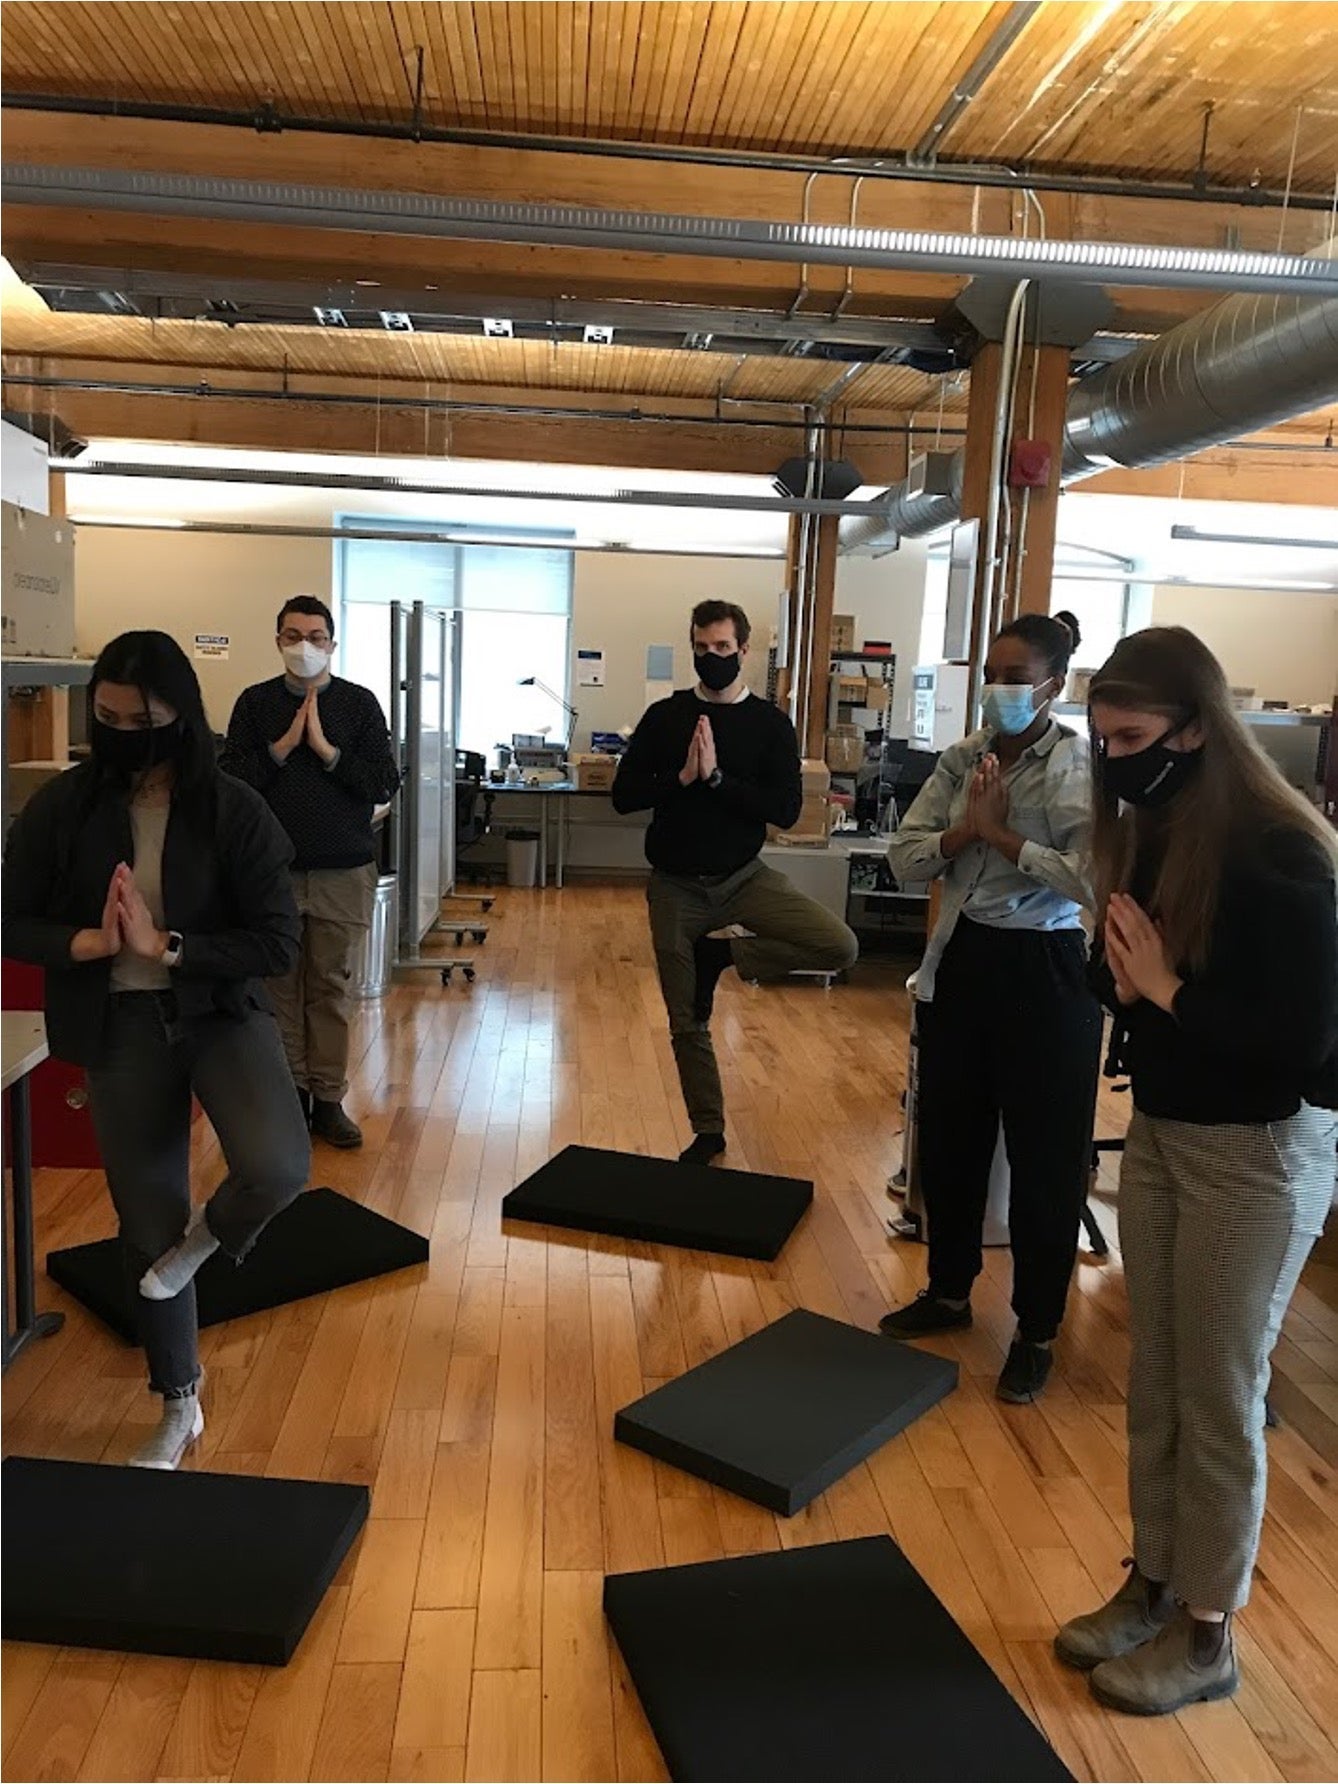 CleanSlate UV team members practicing yoga